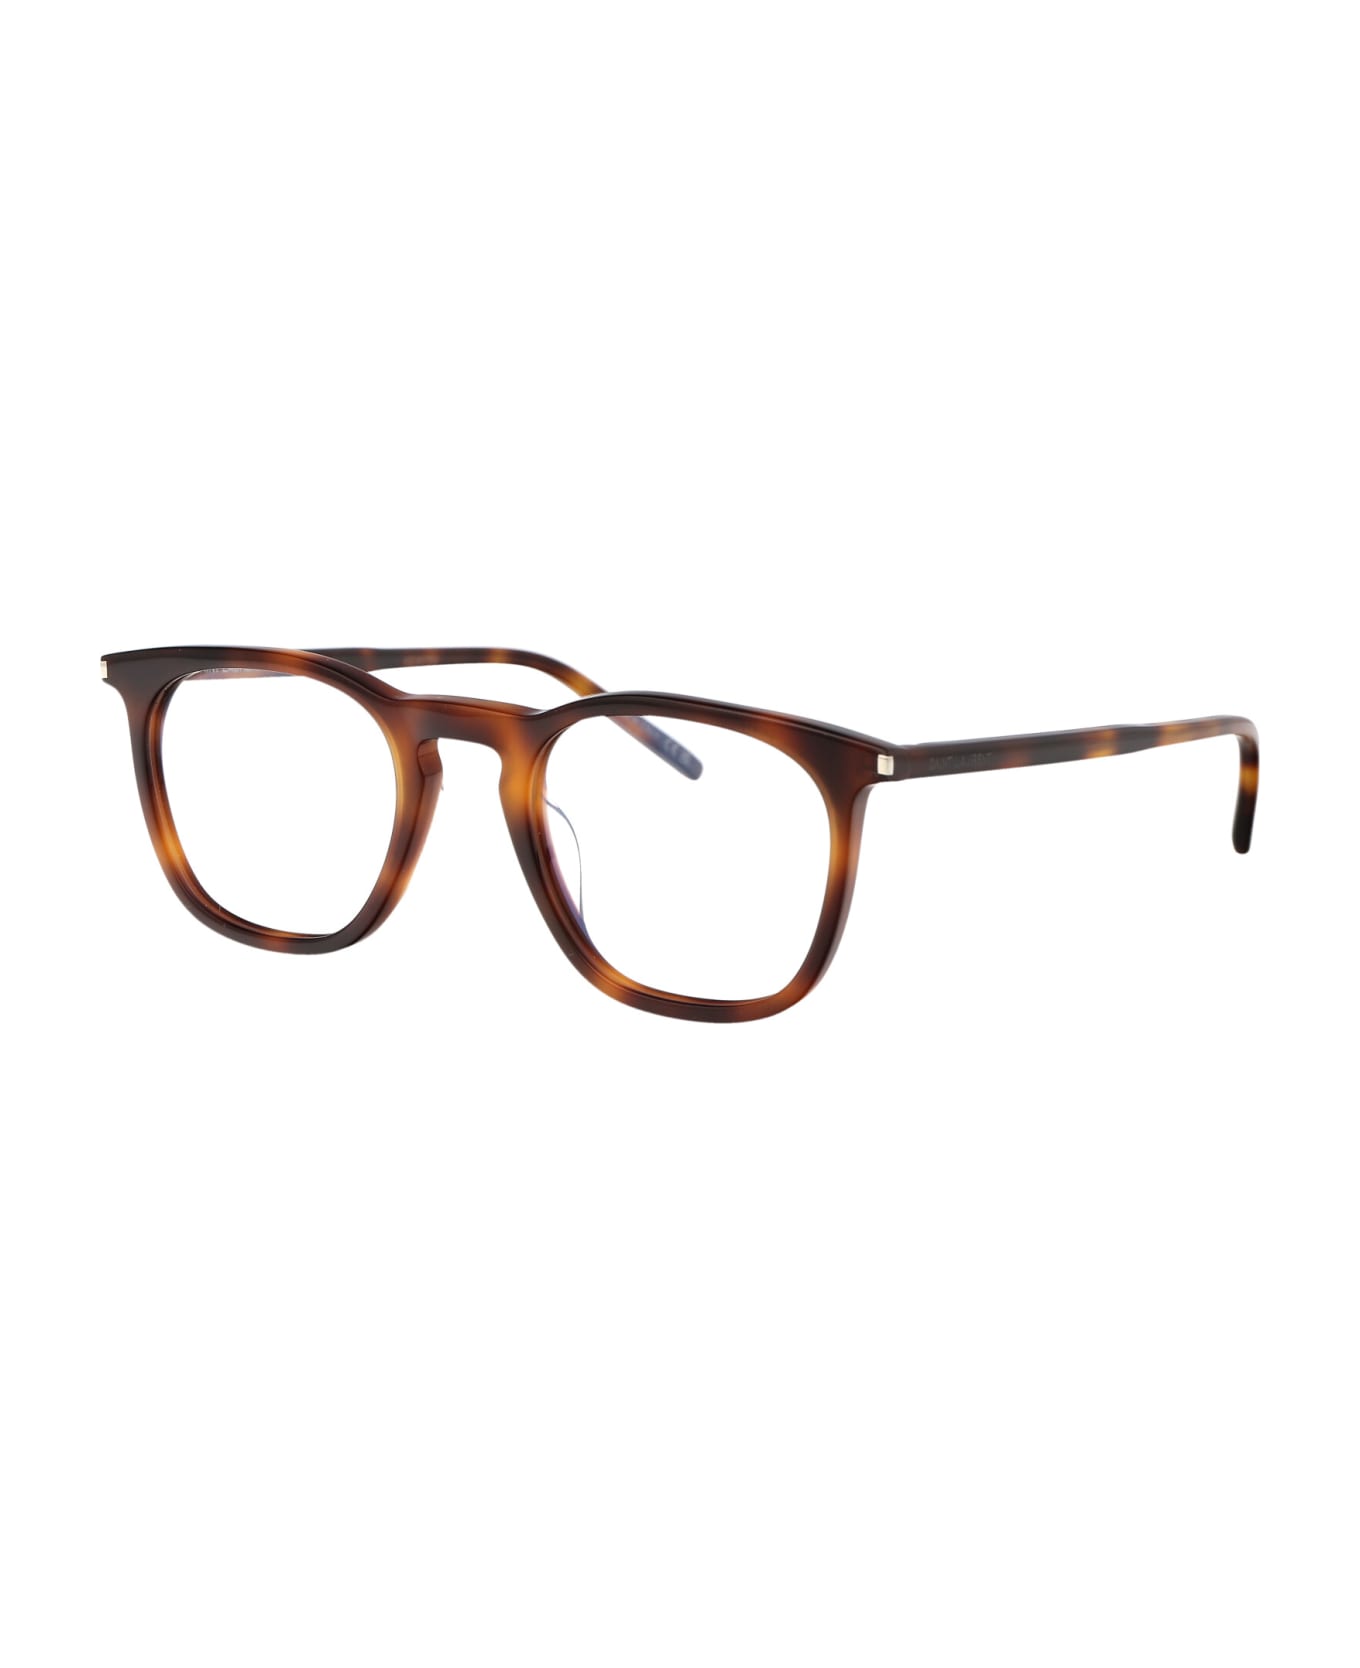 Saint Laurent Eyewear Sl 623 Opt Glasses - 003 HAVANA HAVANA TRANSPARENT